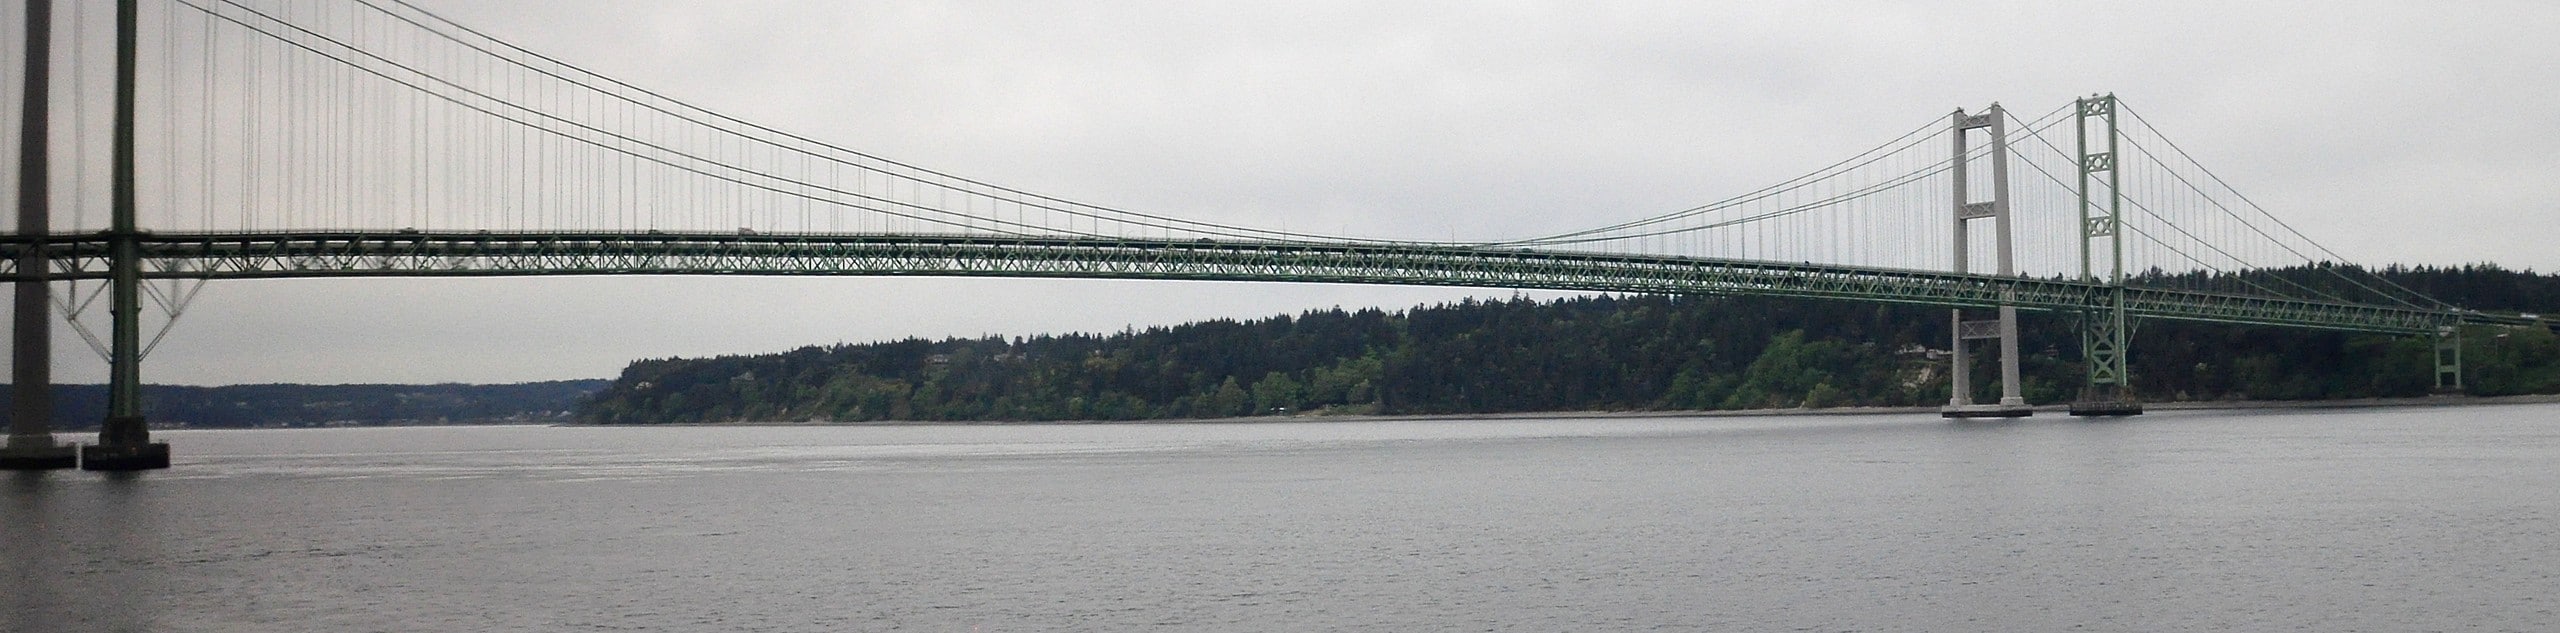 Tacoma Narrows Bridge Walk